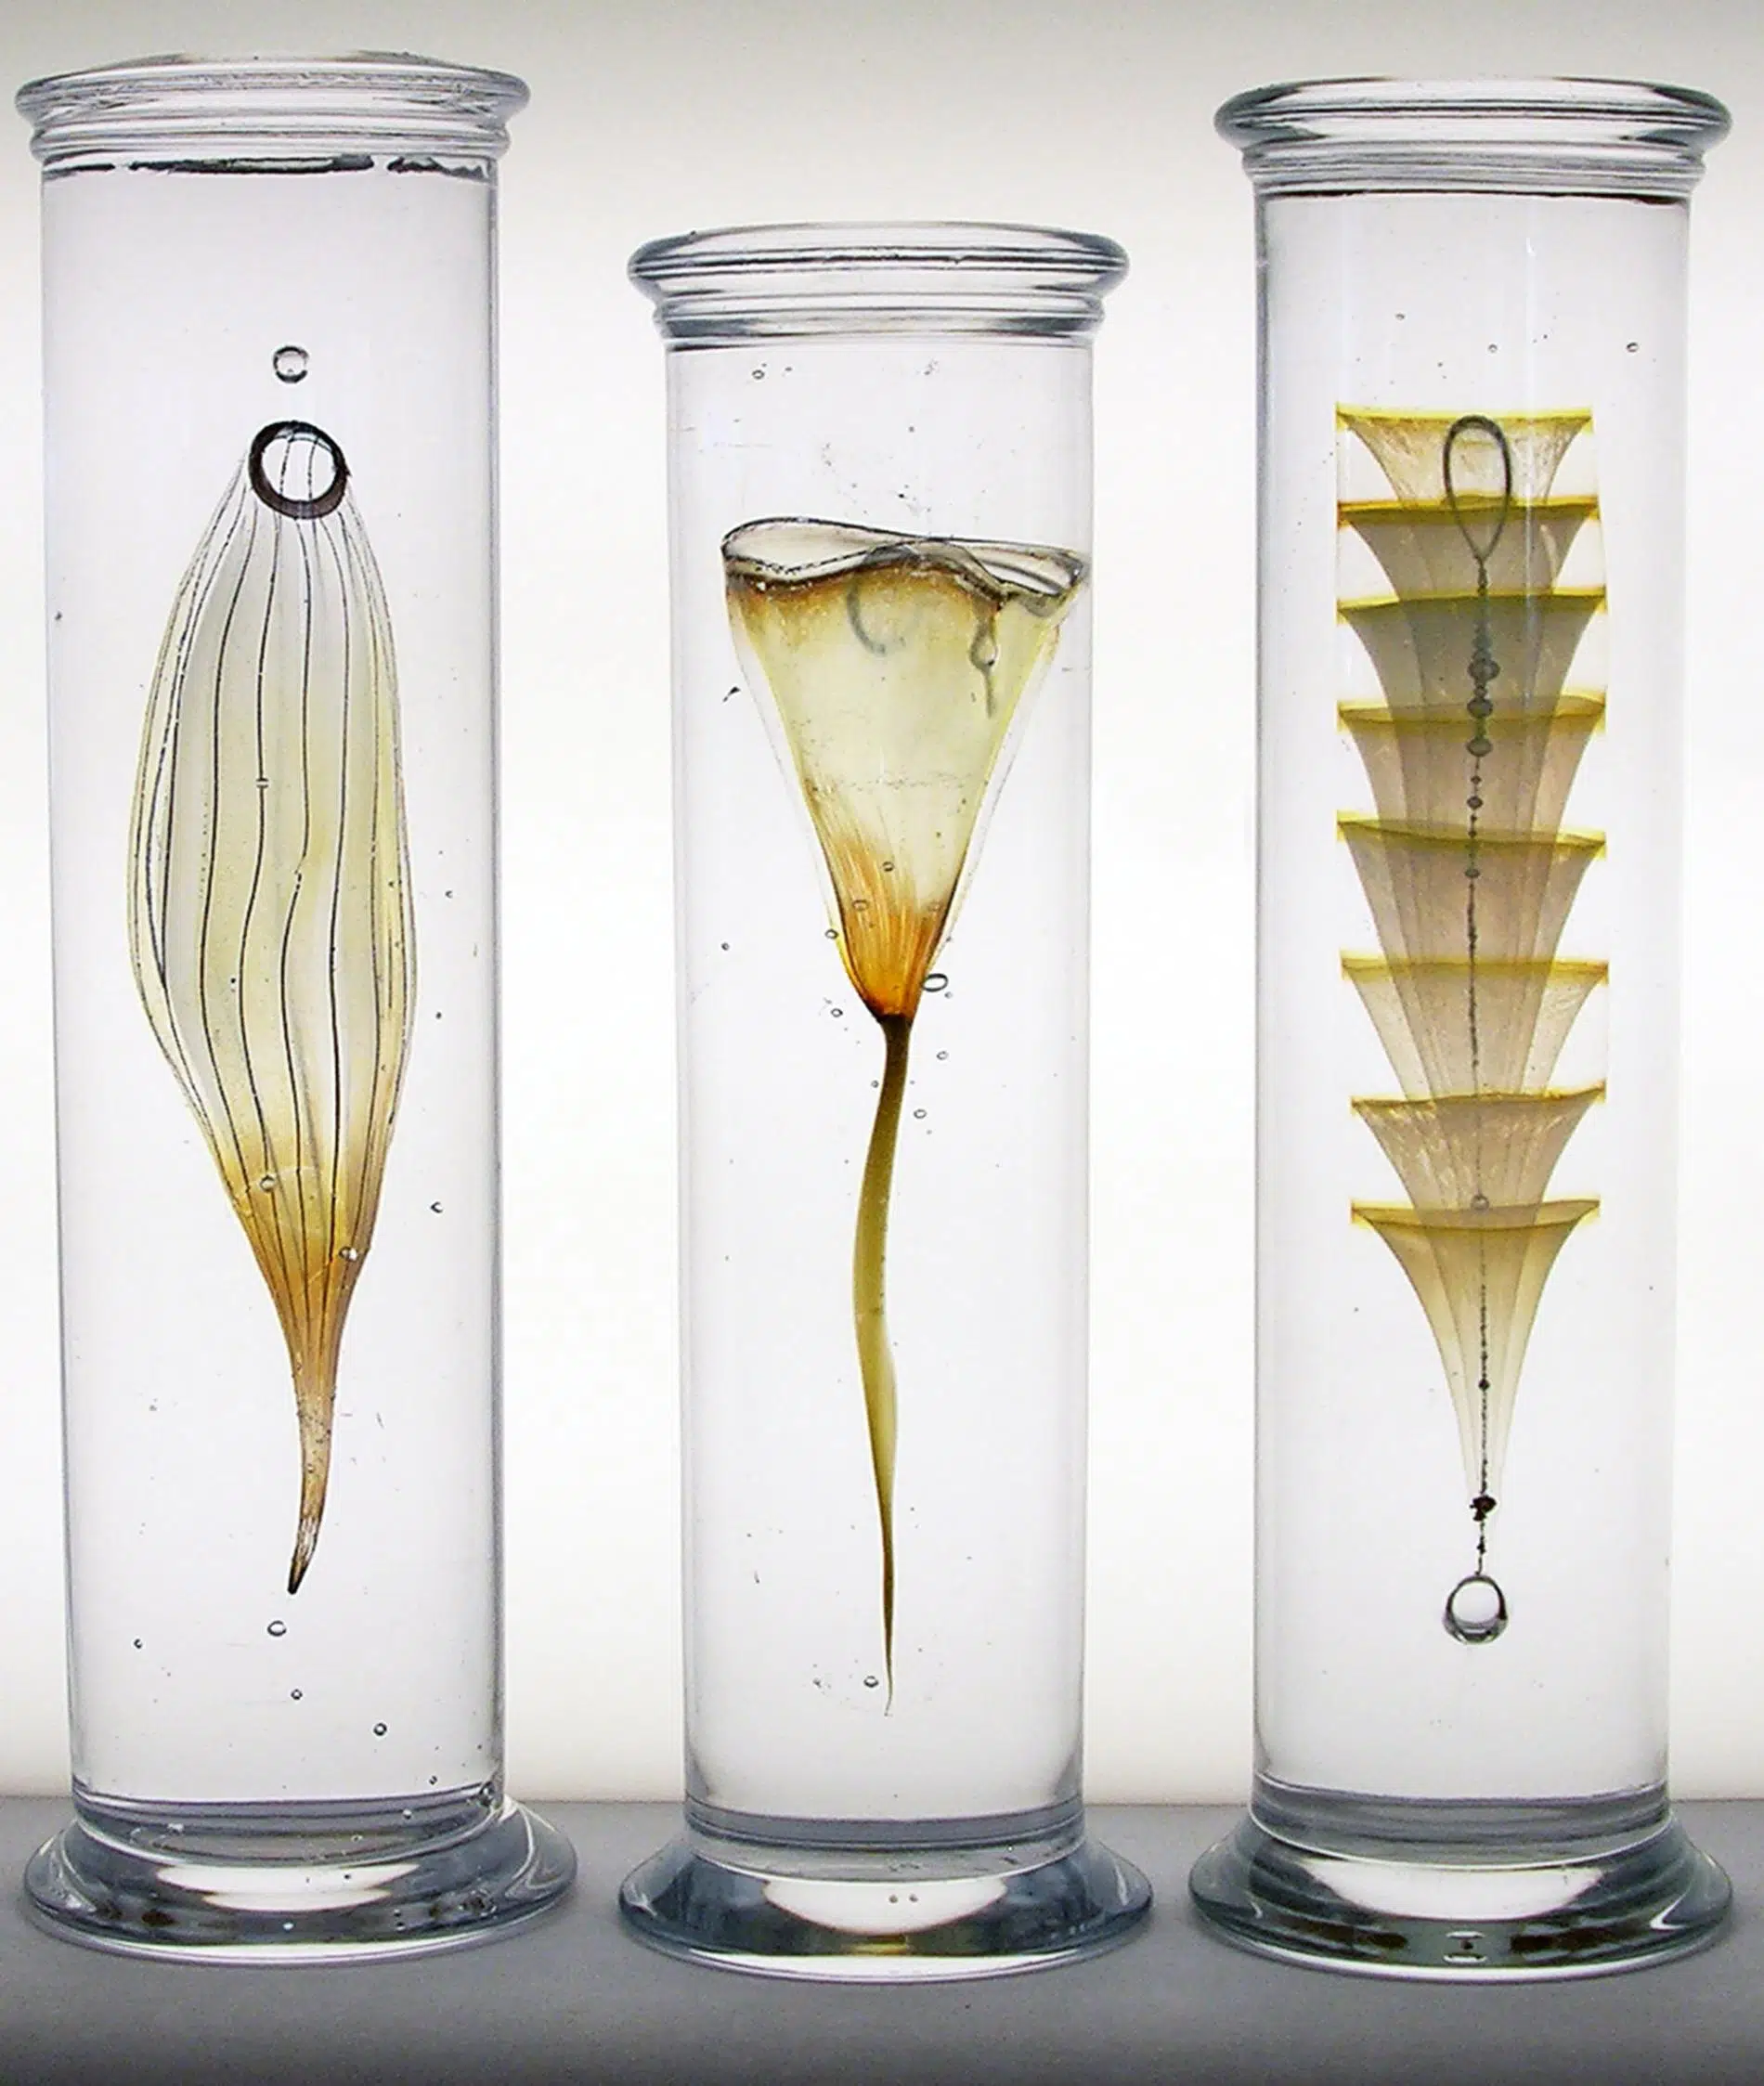 steffen damm escultura de especimenes de la naturaleza en vidrio marine specimen collection